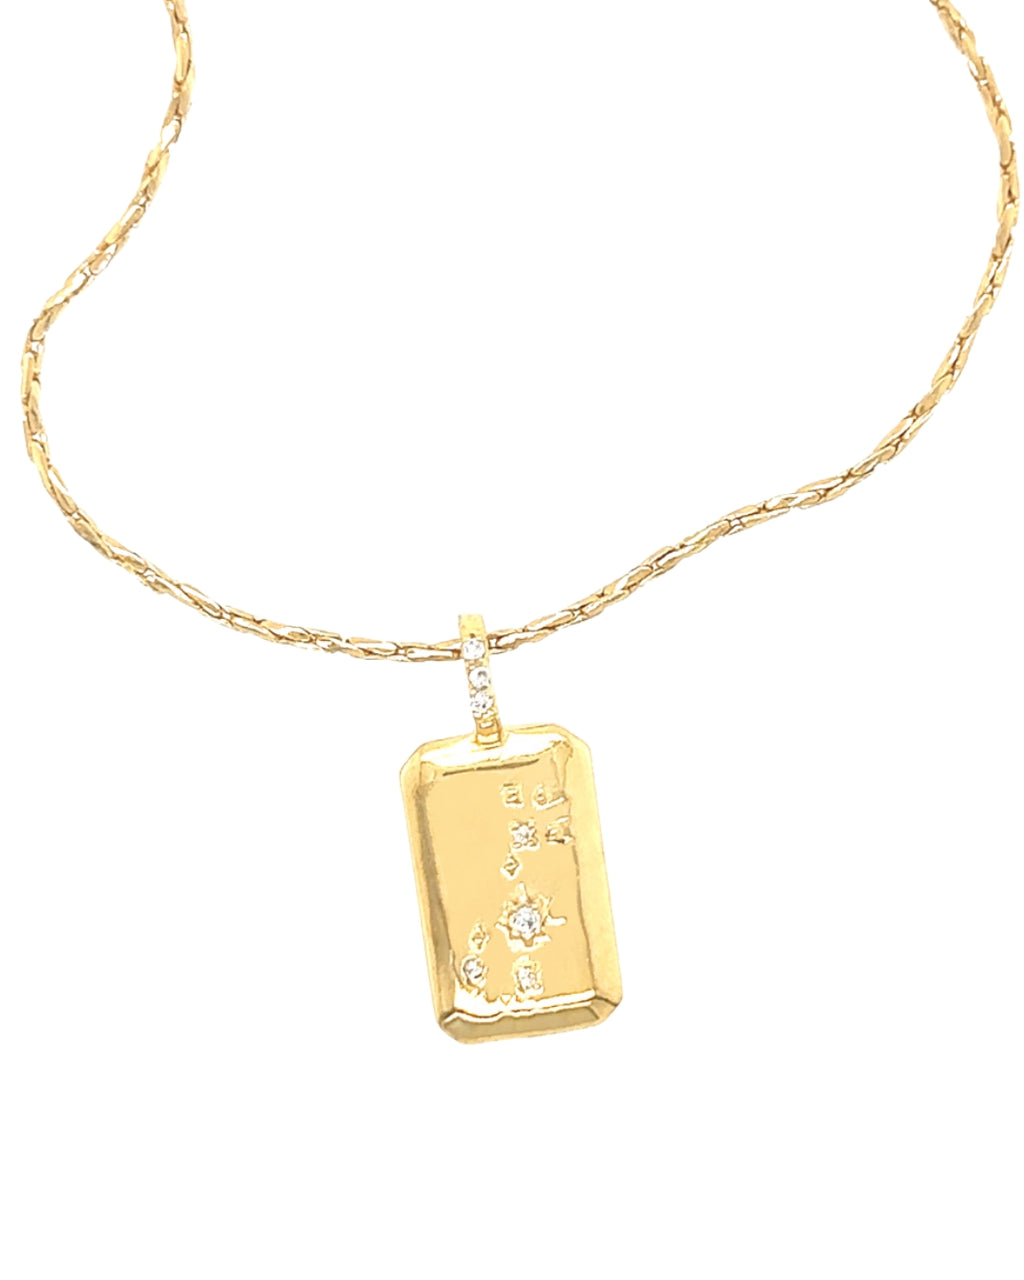 Gold Scorpio Constellation Zodiac Pendant on a Gold Necklace Chain